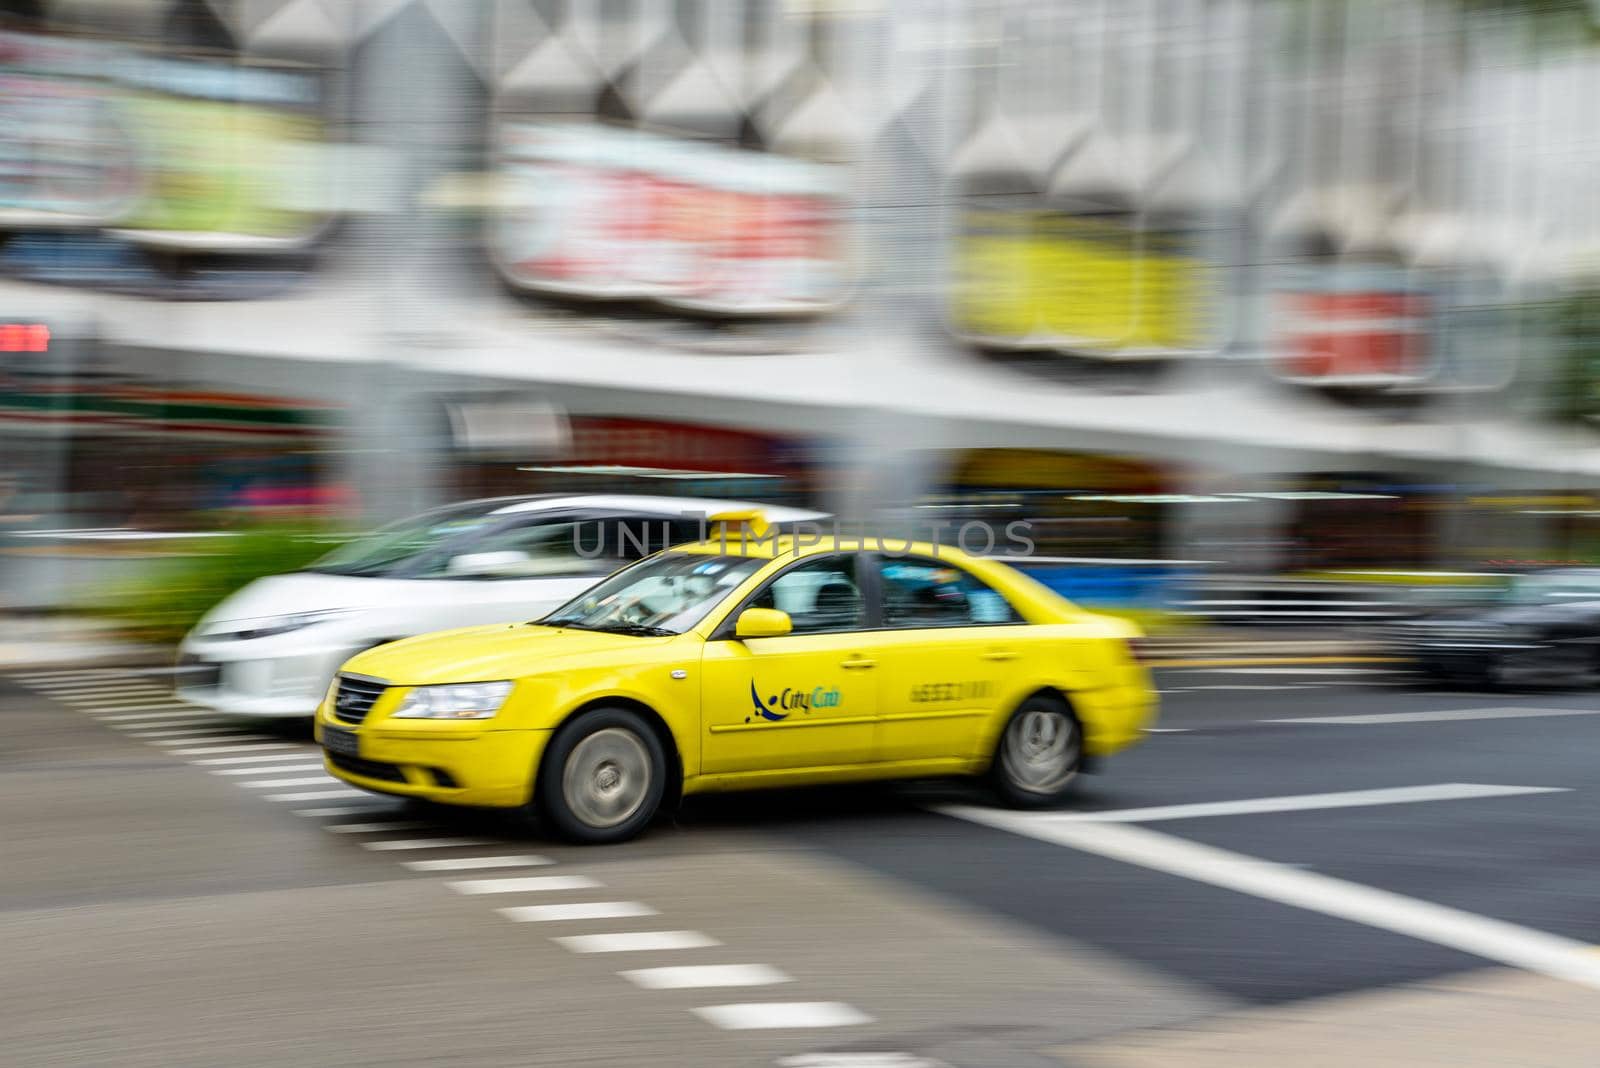 SINGAPORE - CIRCA JANUARY 2016: Yellow Hyundai taxi with motion blur.